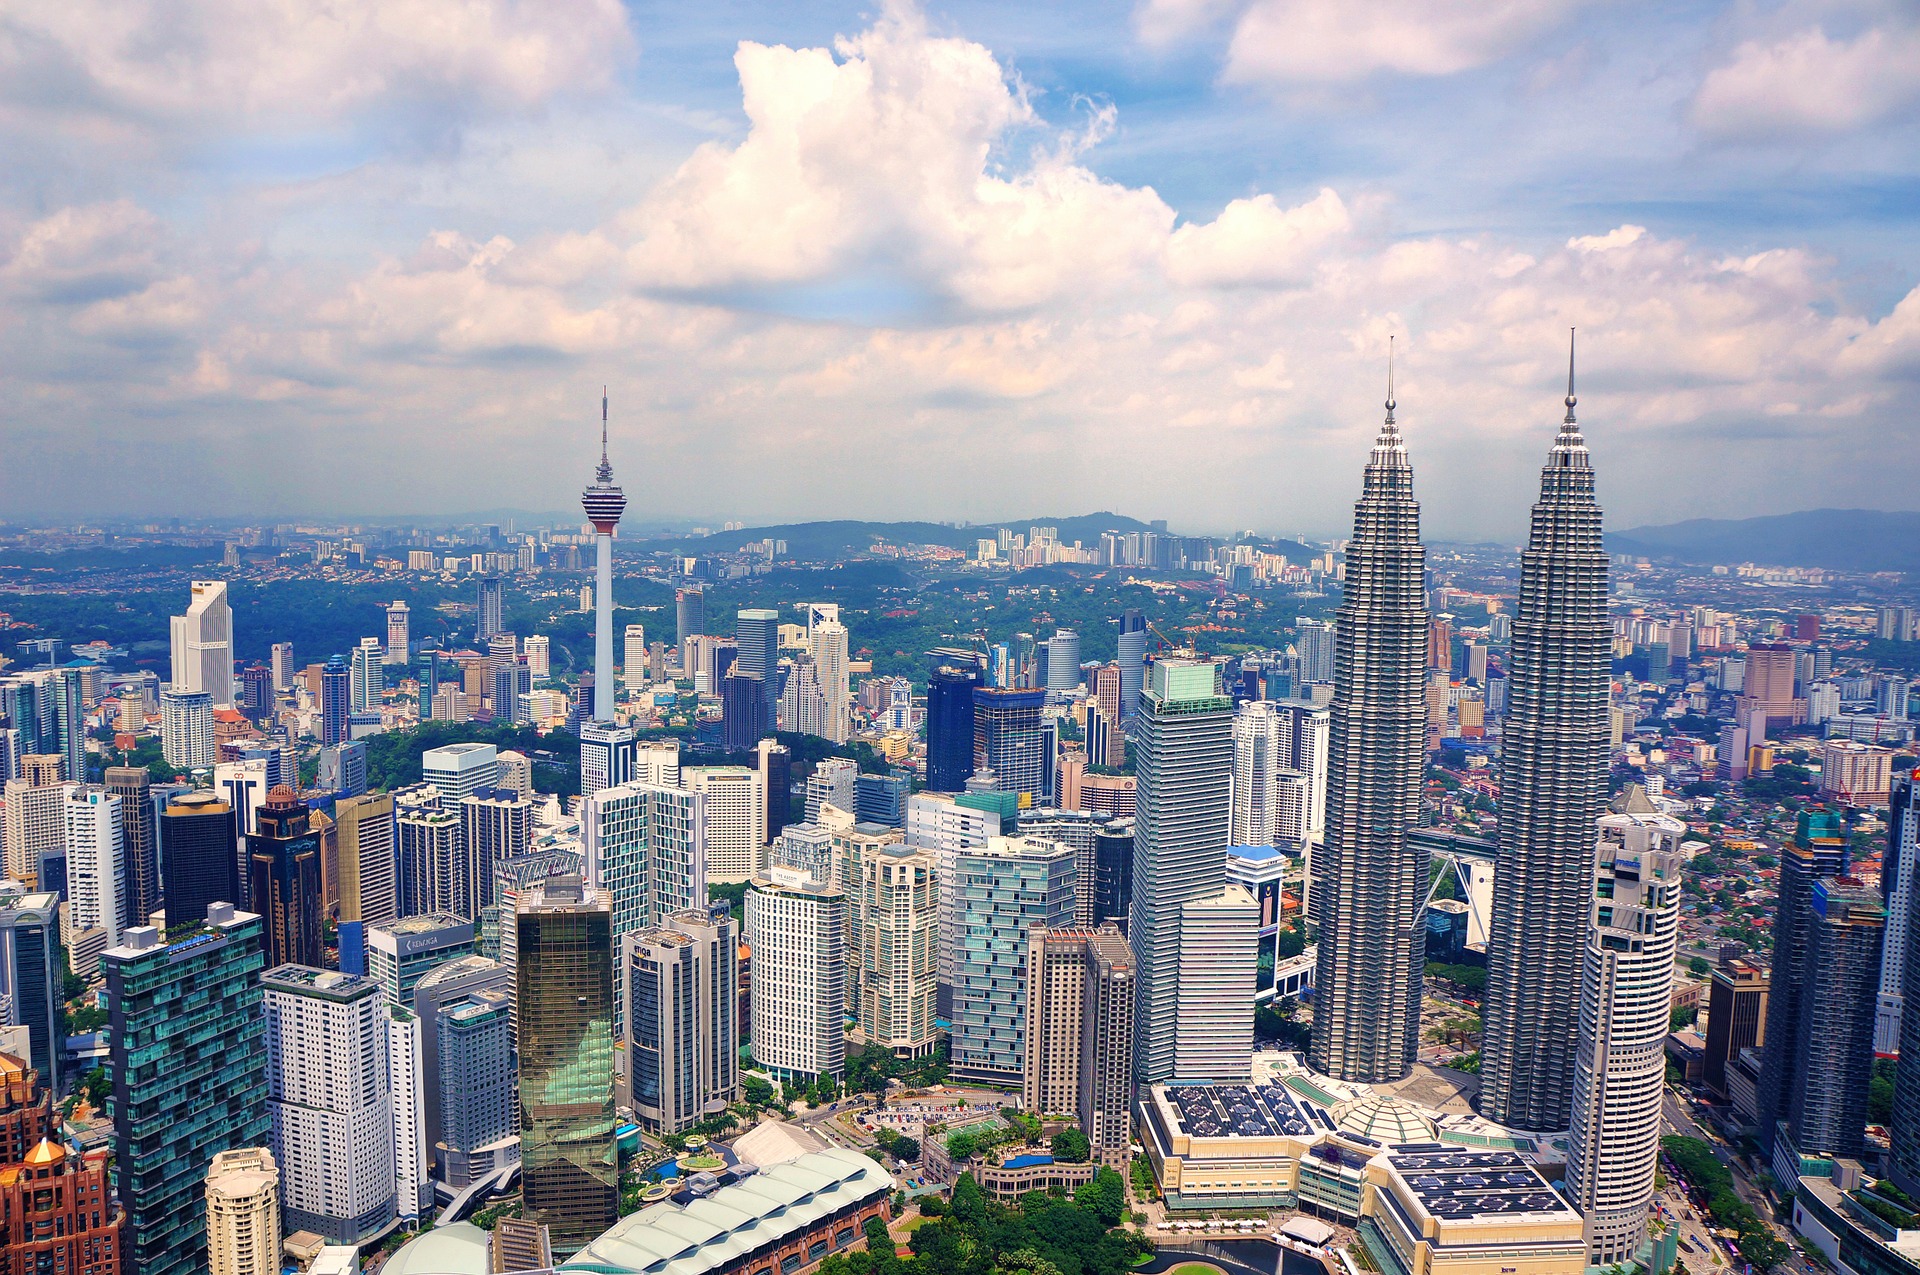 Image of the skyline of Malaysia